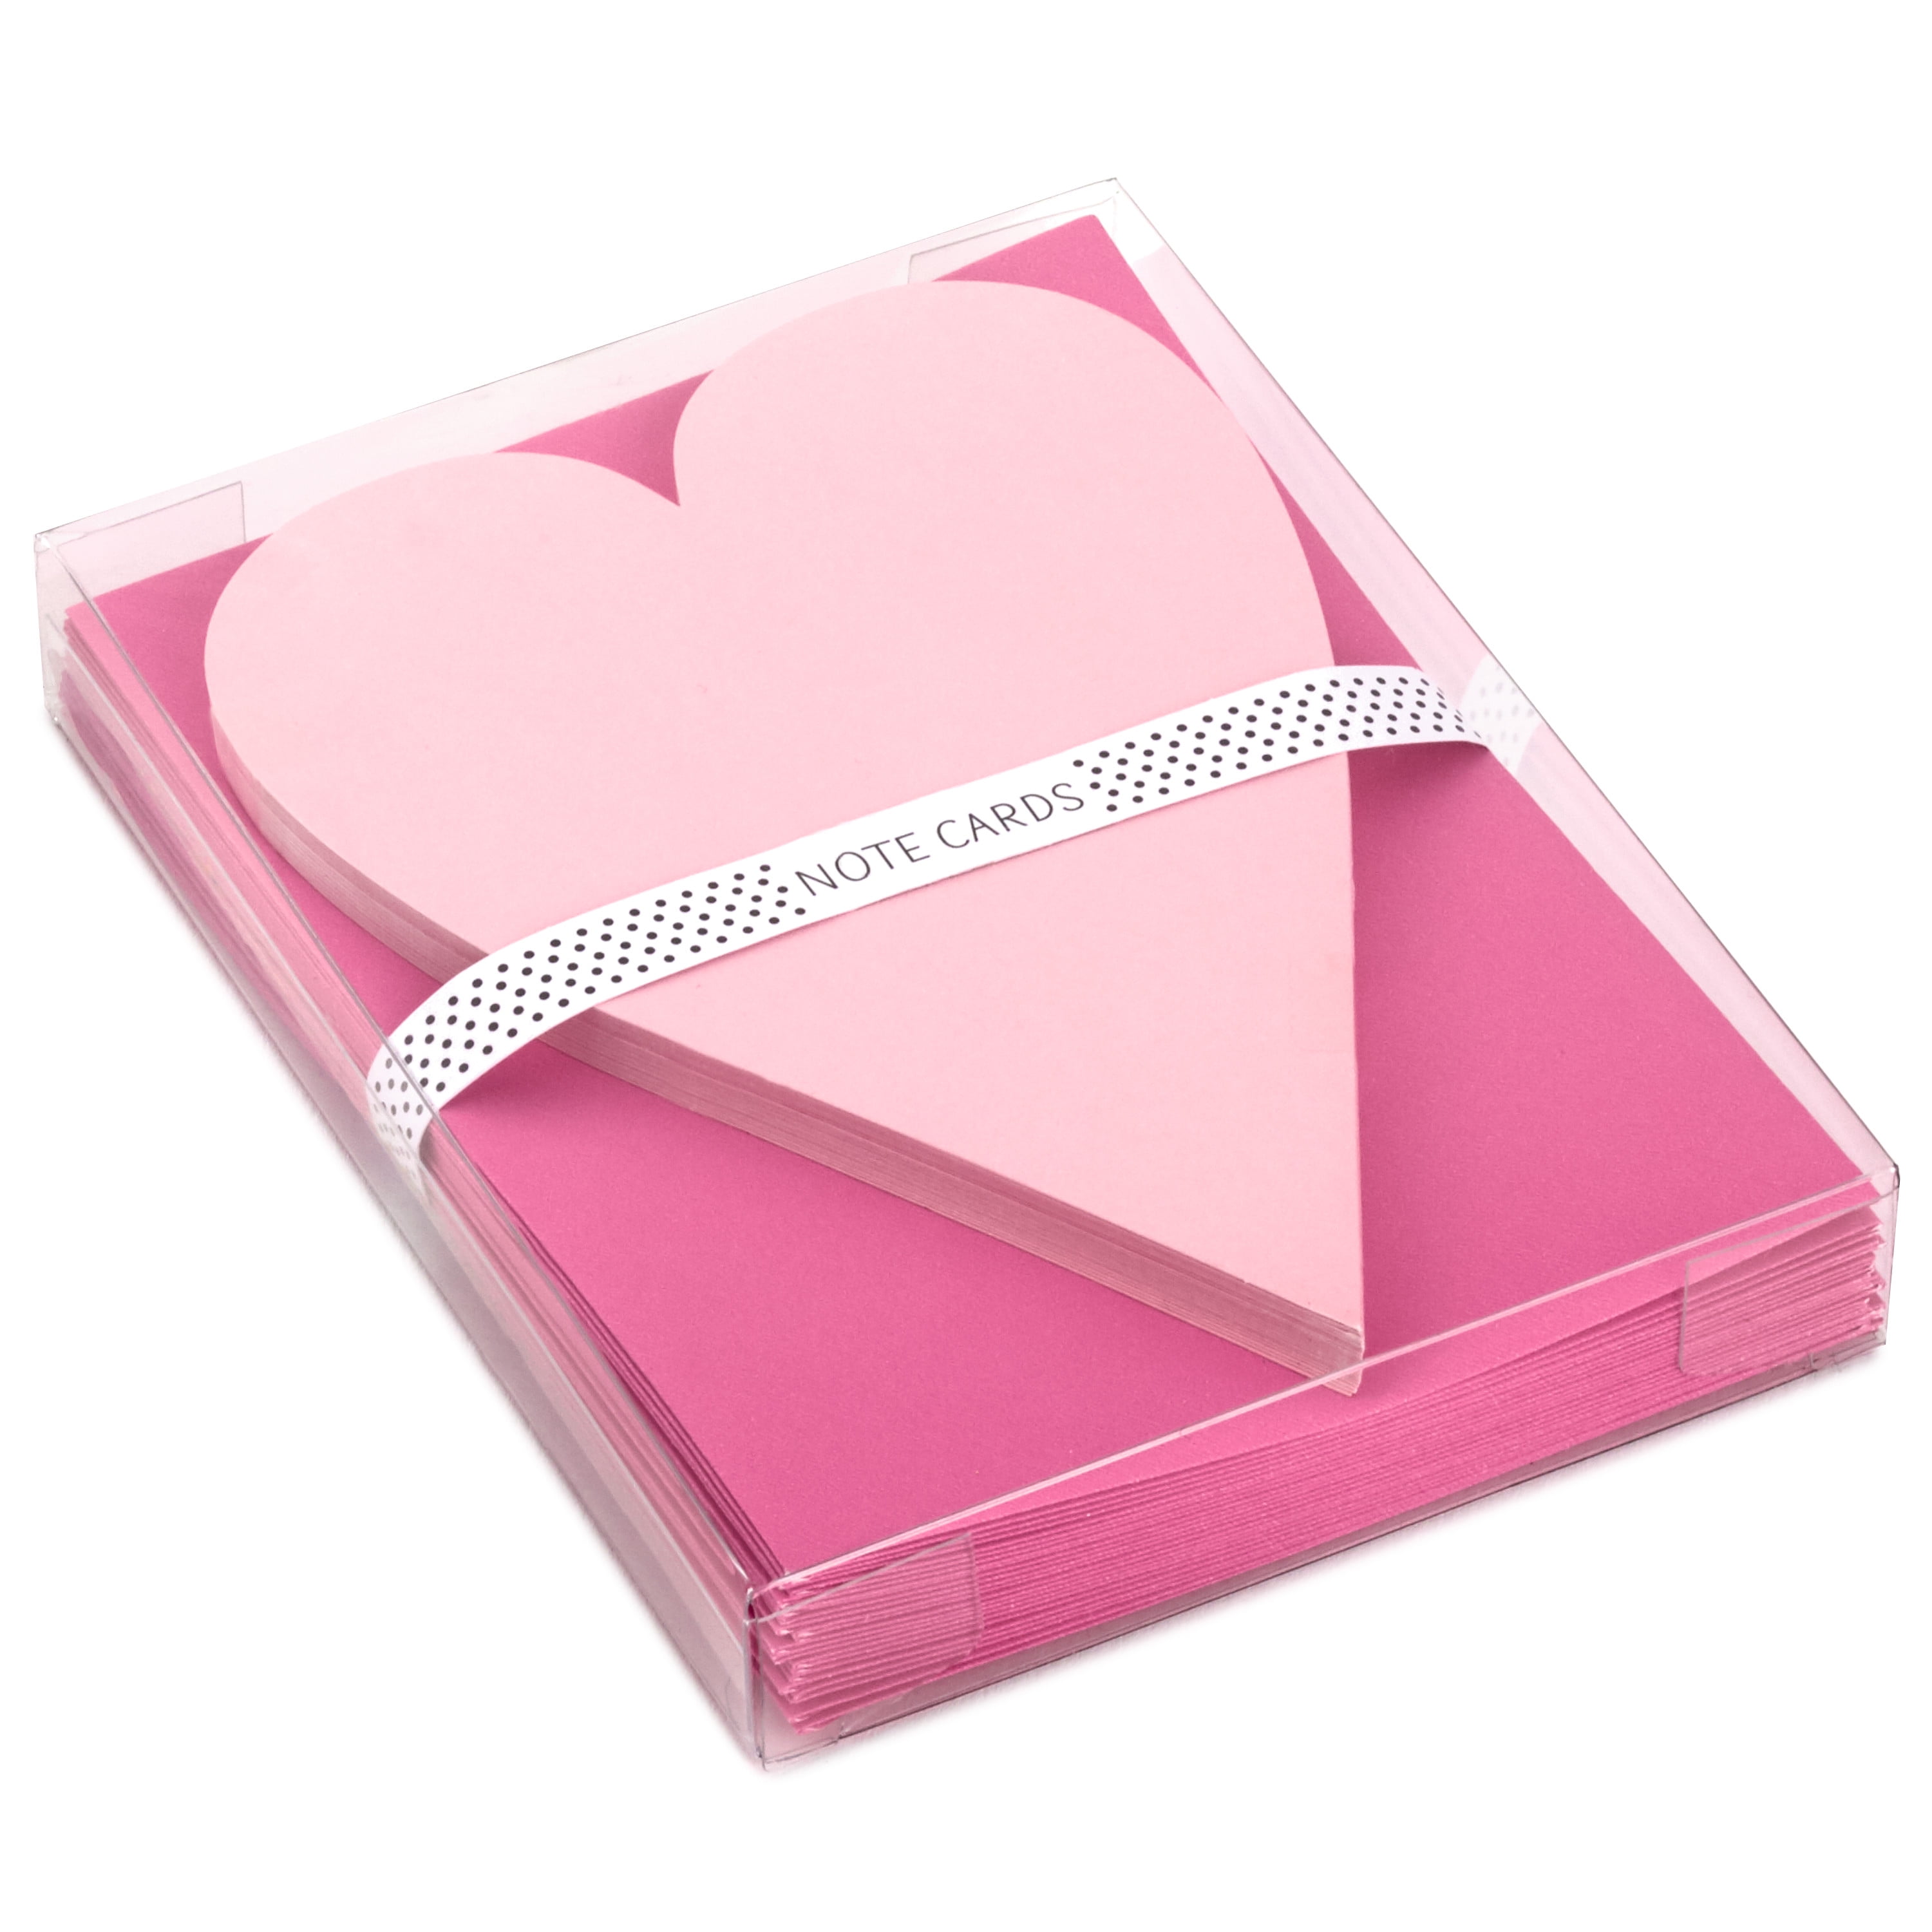 Hallmark Flat Blank Note Cards, Pink Heart, 24 ct.